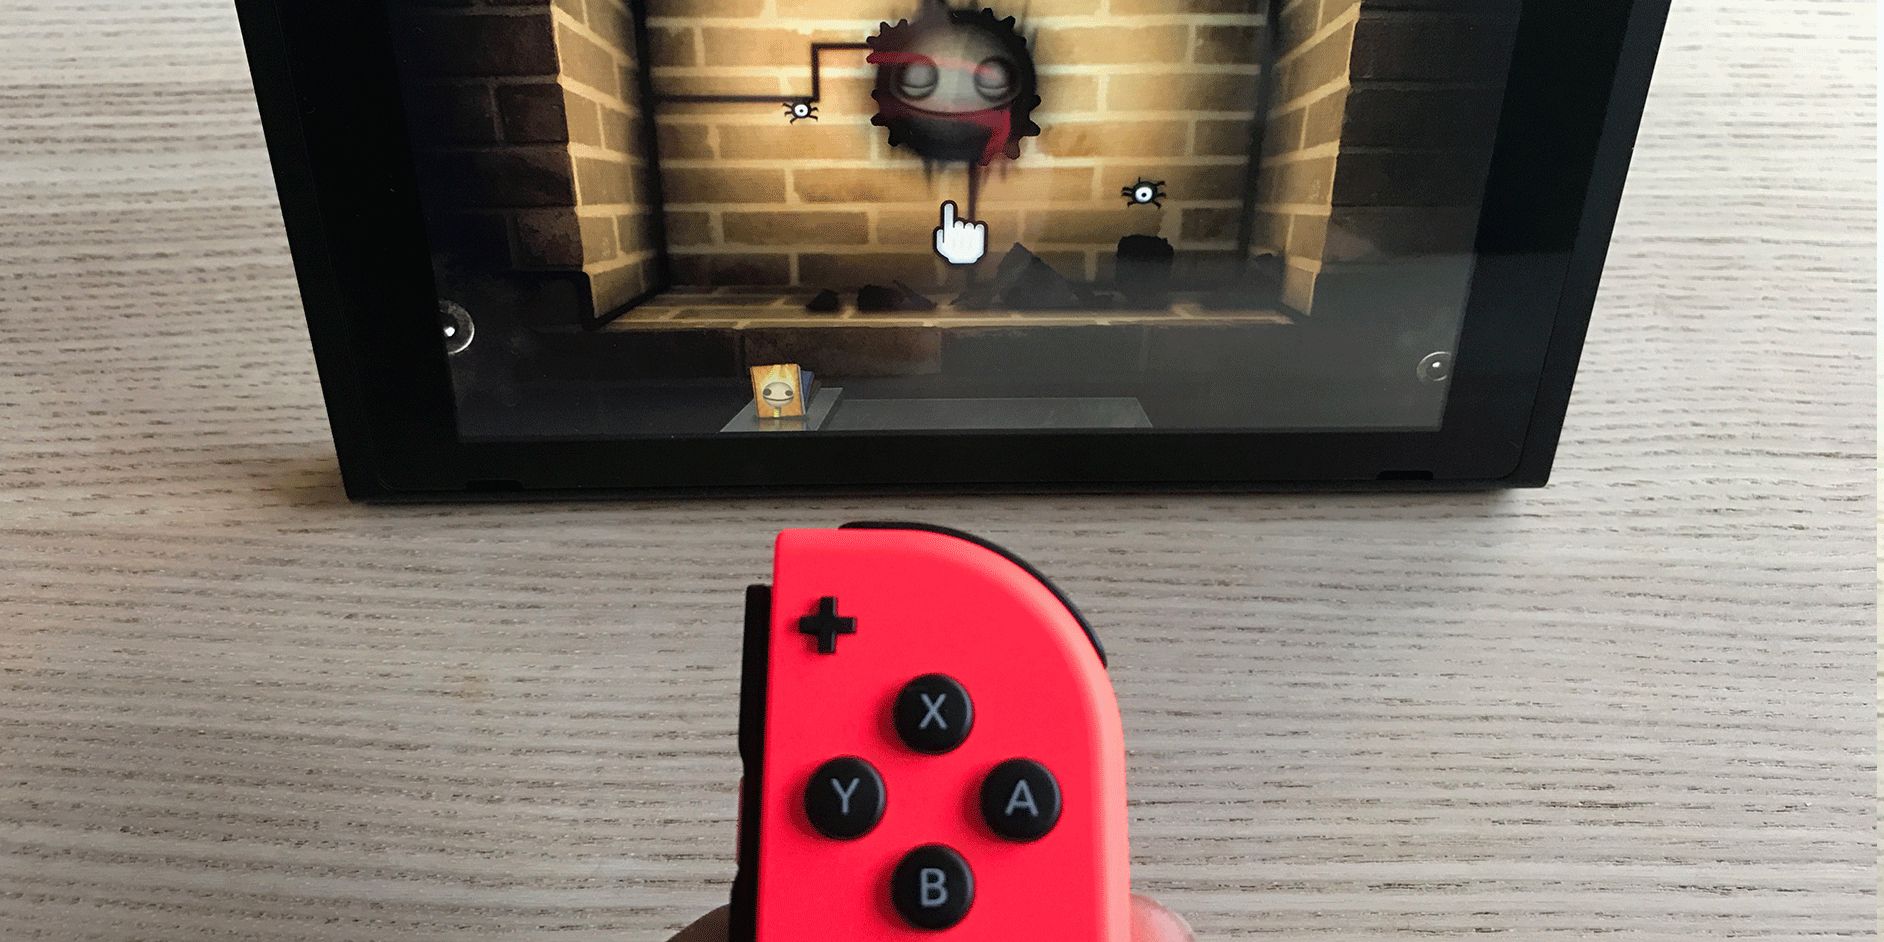 Nintendo Switch Gyroscope Controls World Of Goo Red Joy-Con